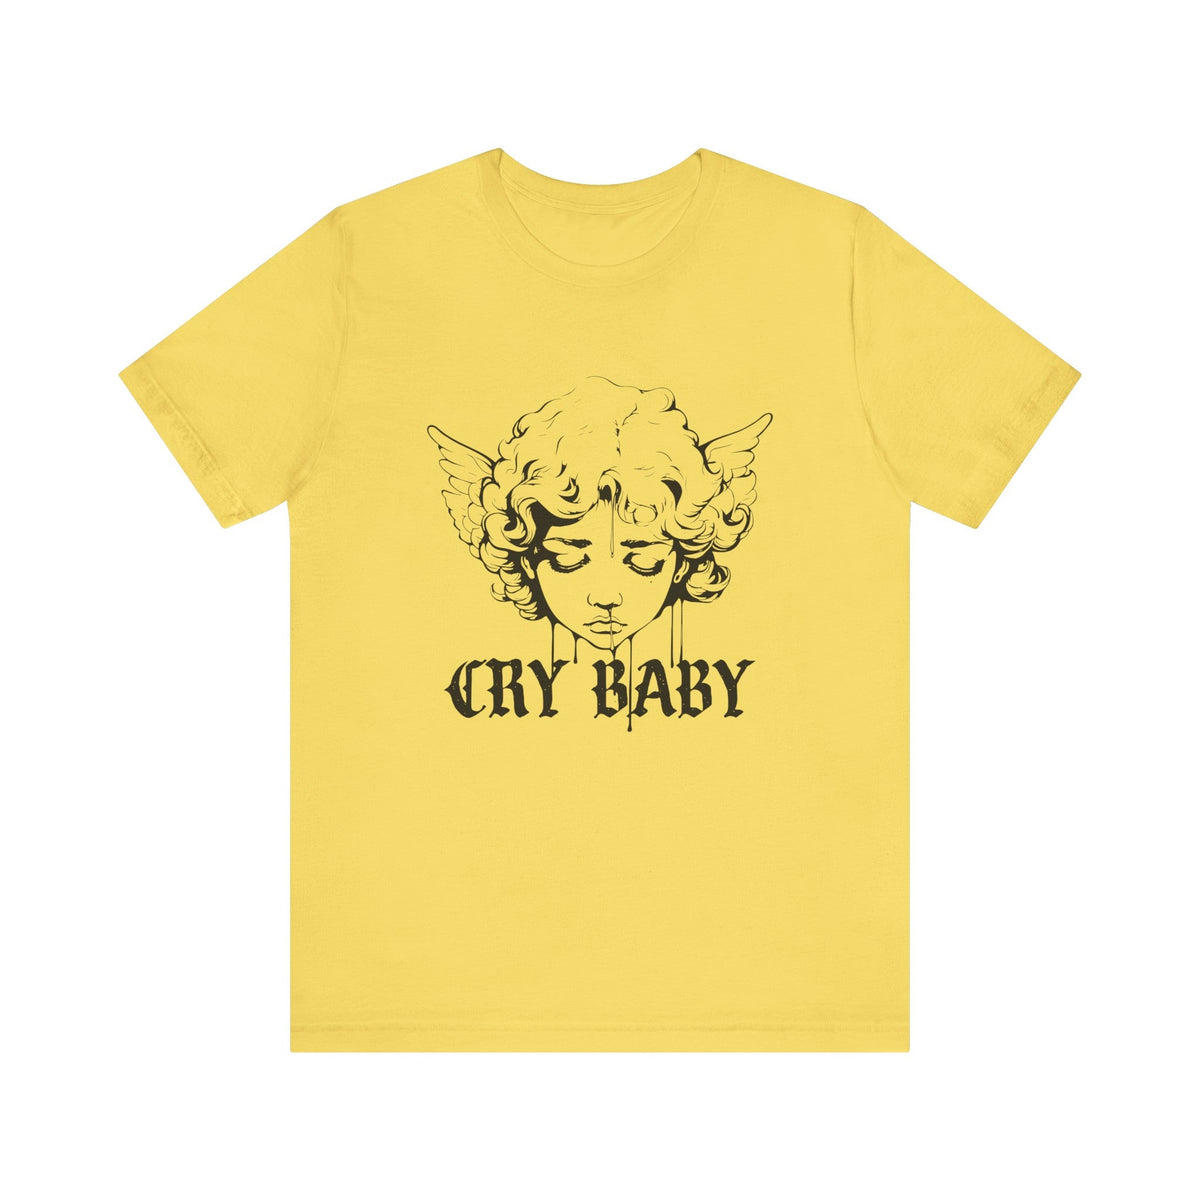 Crybaby Cherub T - Shirt - Goth Cloth Co.T - Shirt19470640270449450891